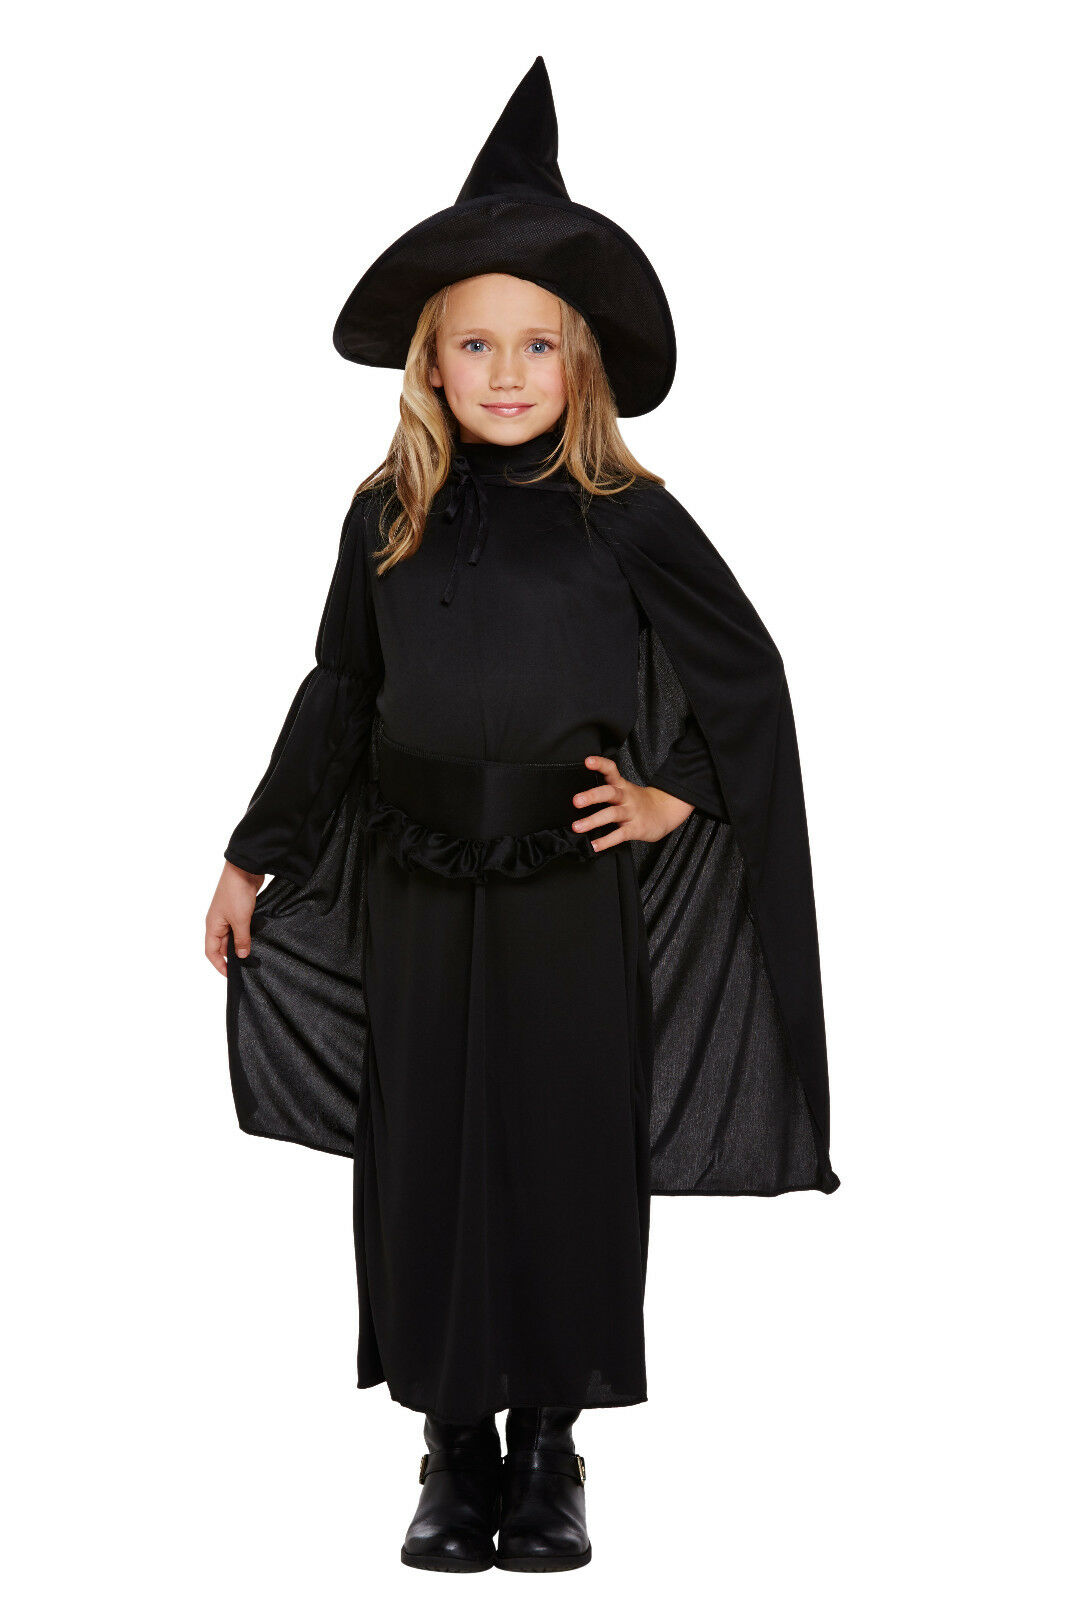 Child Girls Witch Halloween Fancy Dress Costume (4-6 Years)